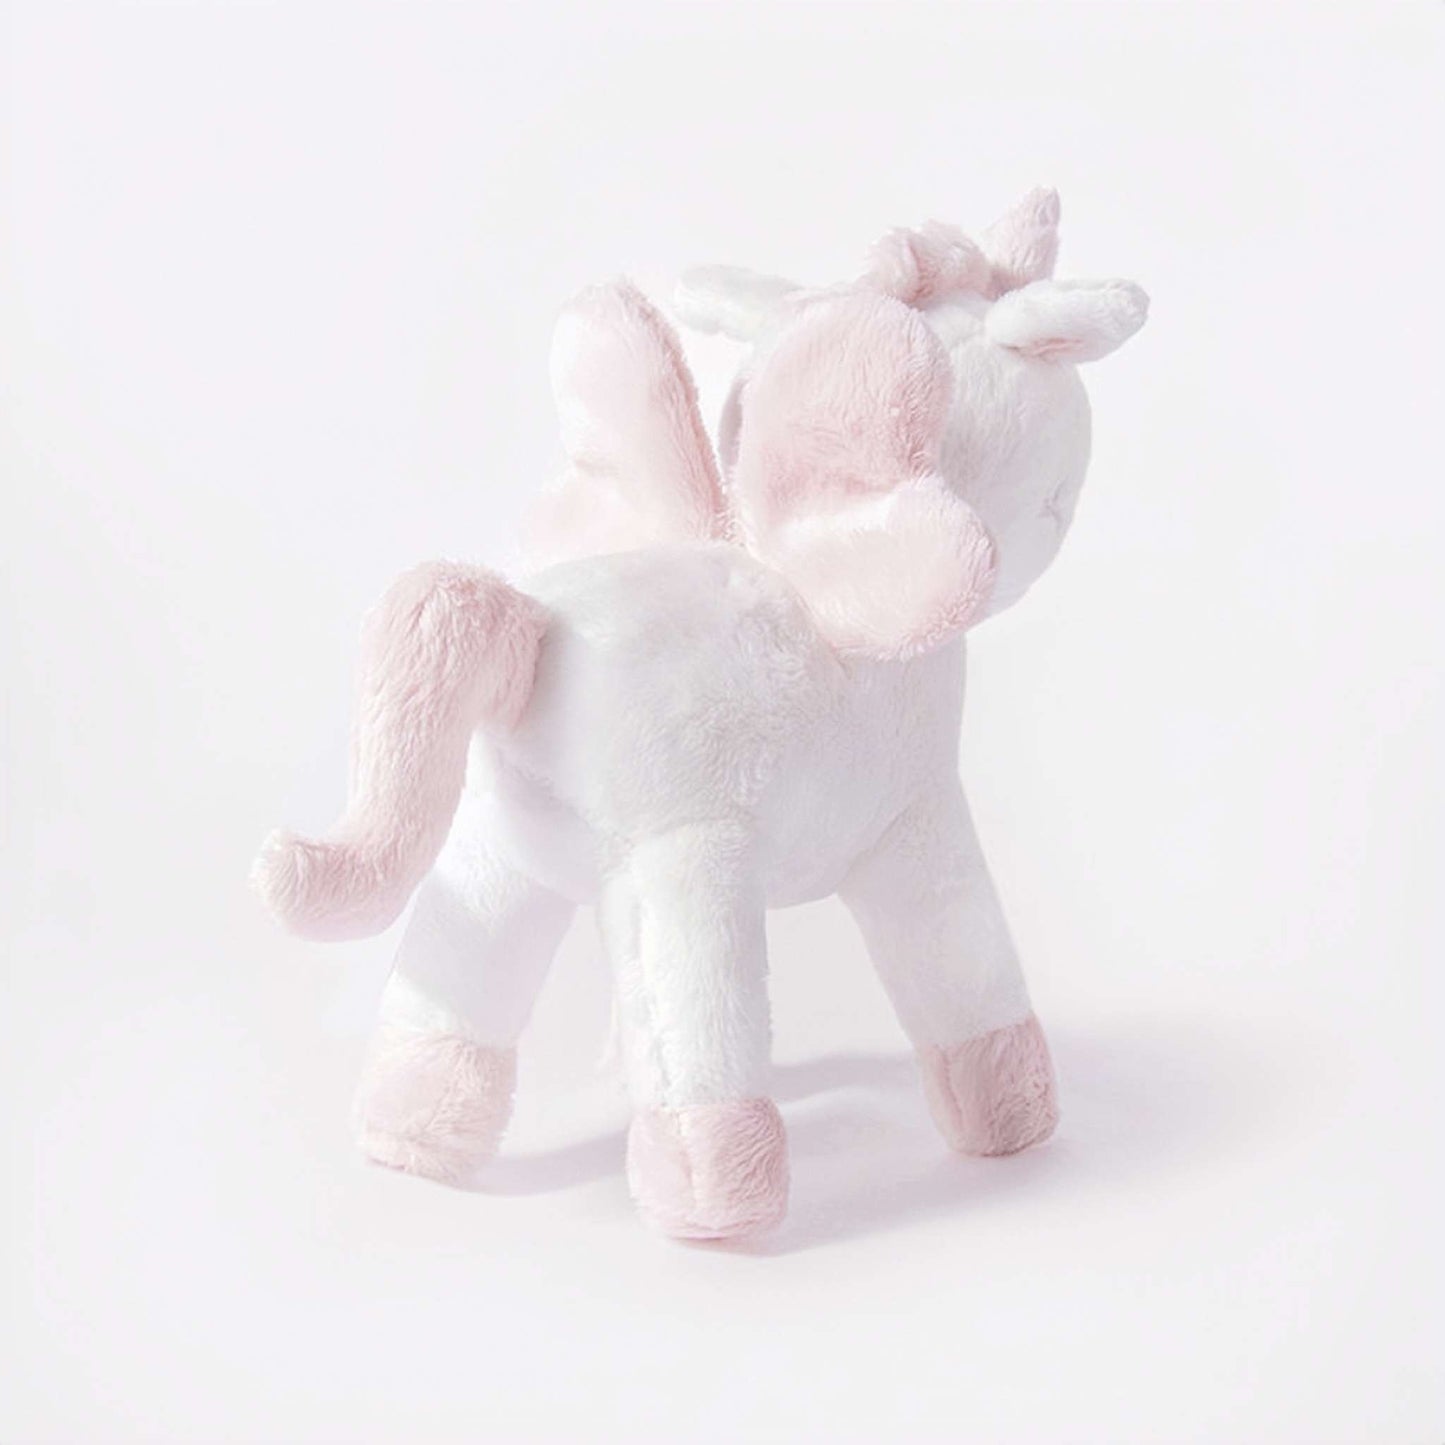 a unicorn plush toy